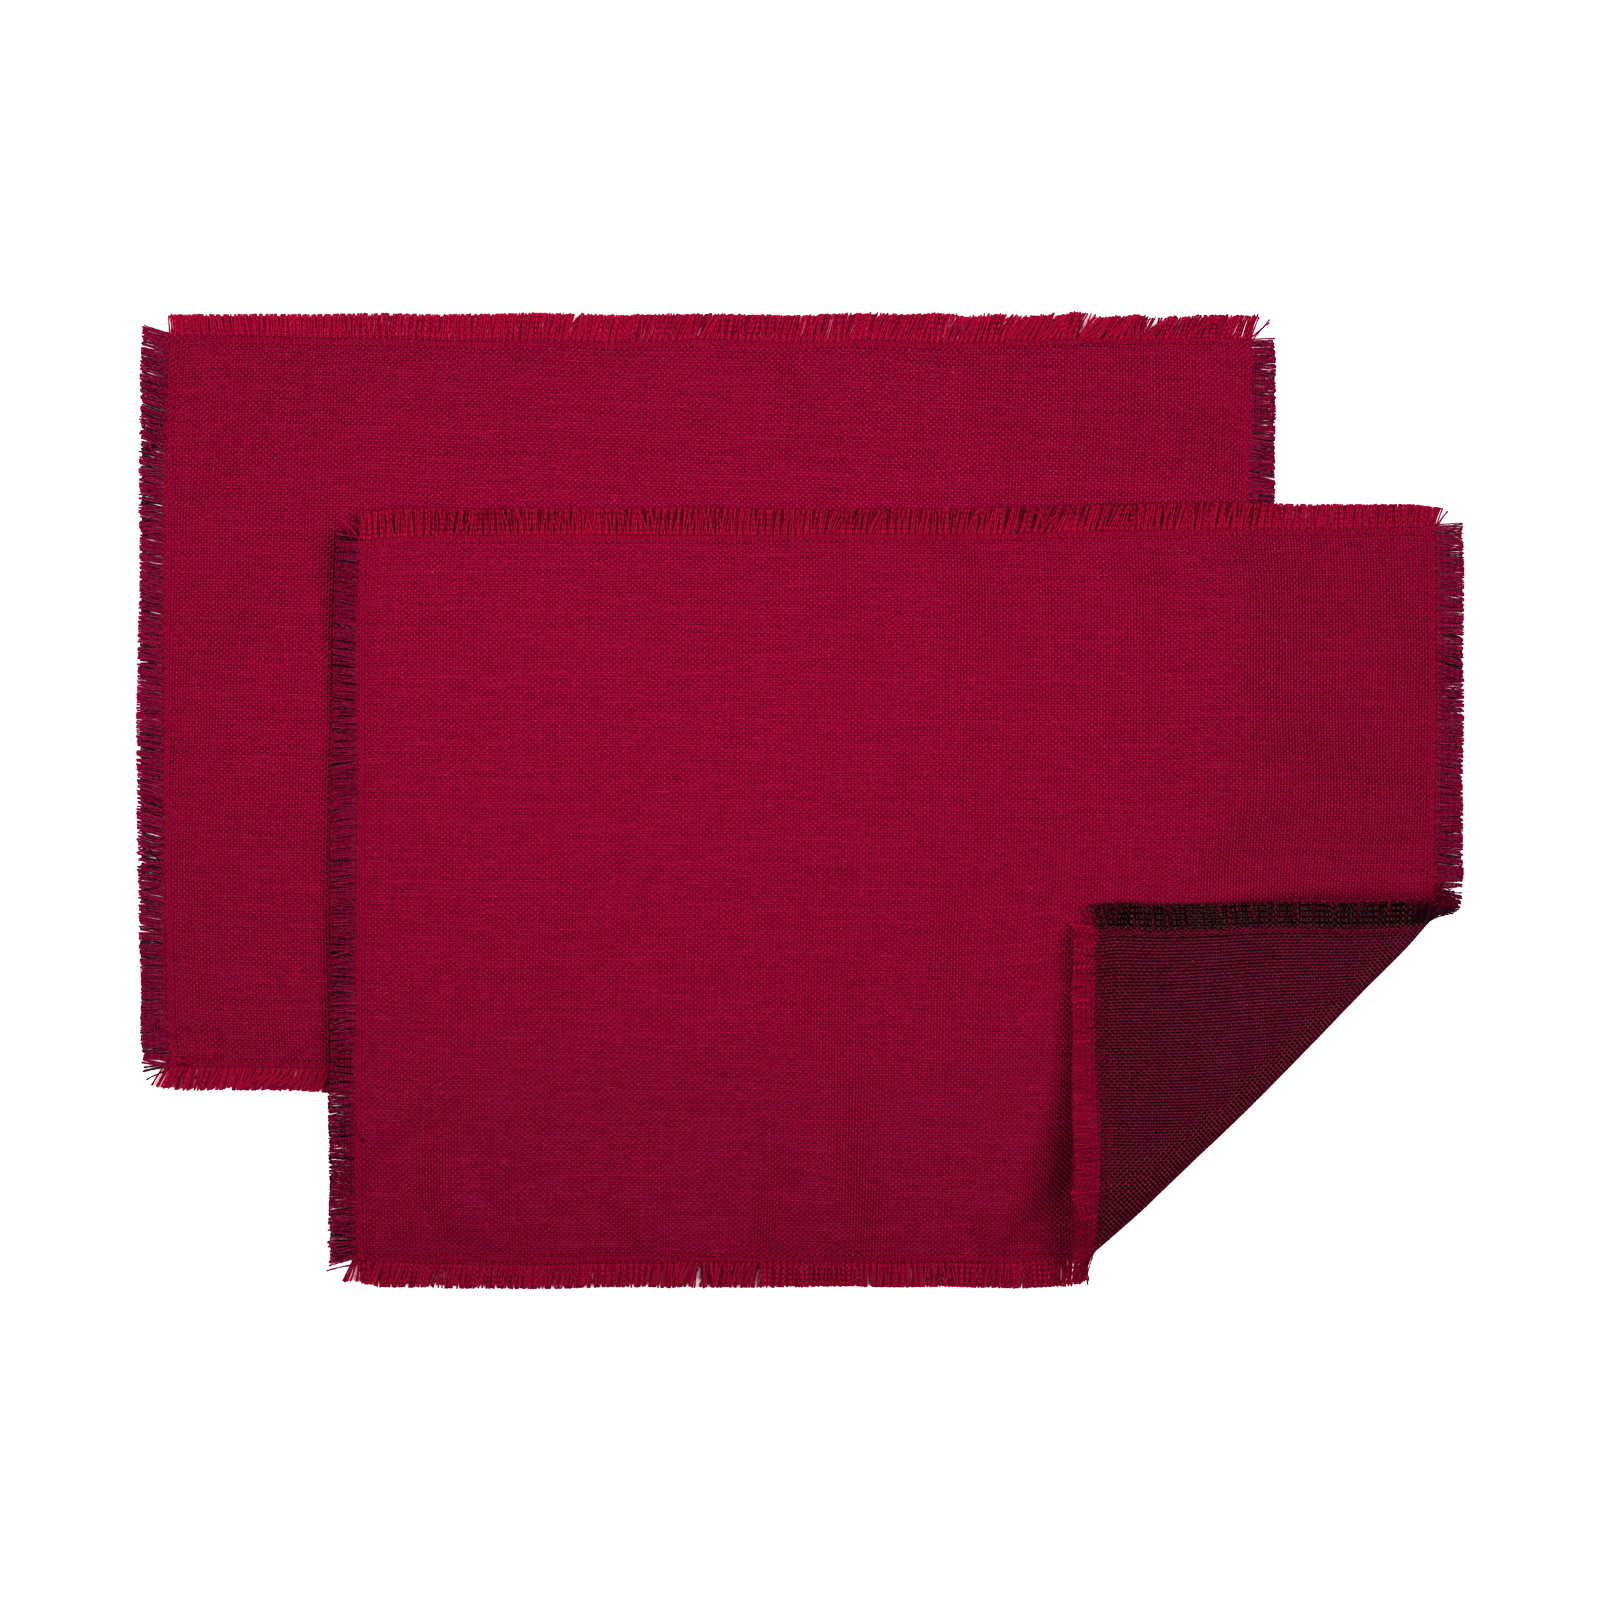 Größe: 33x 48 cm Farbe: rot/rubin #farbe_rot/rubin